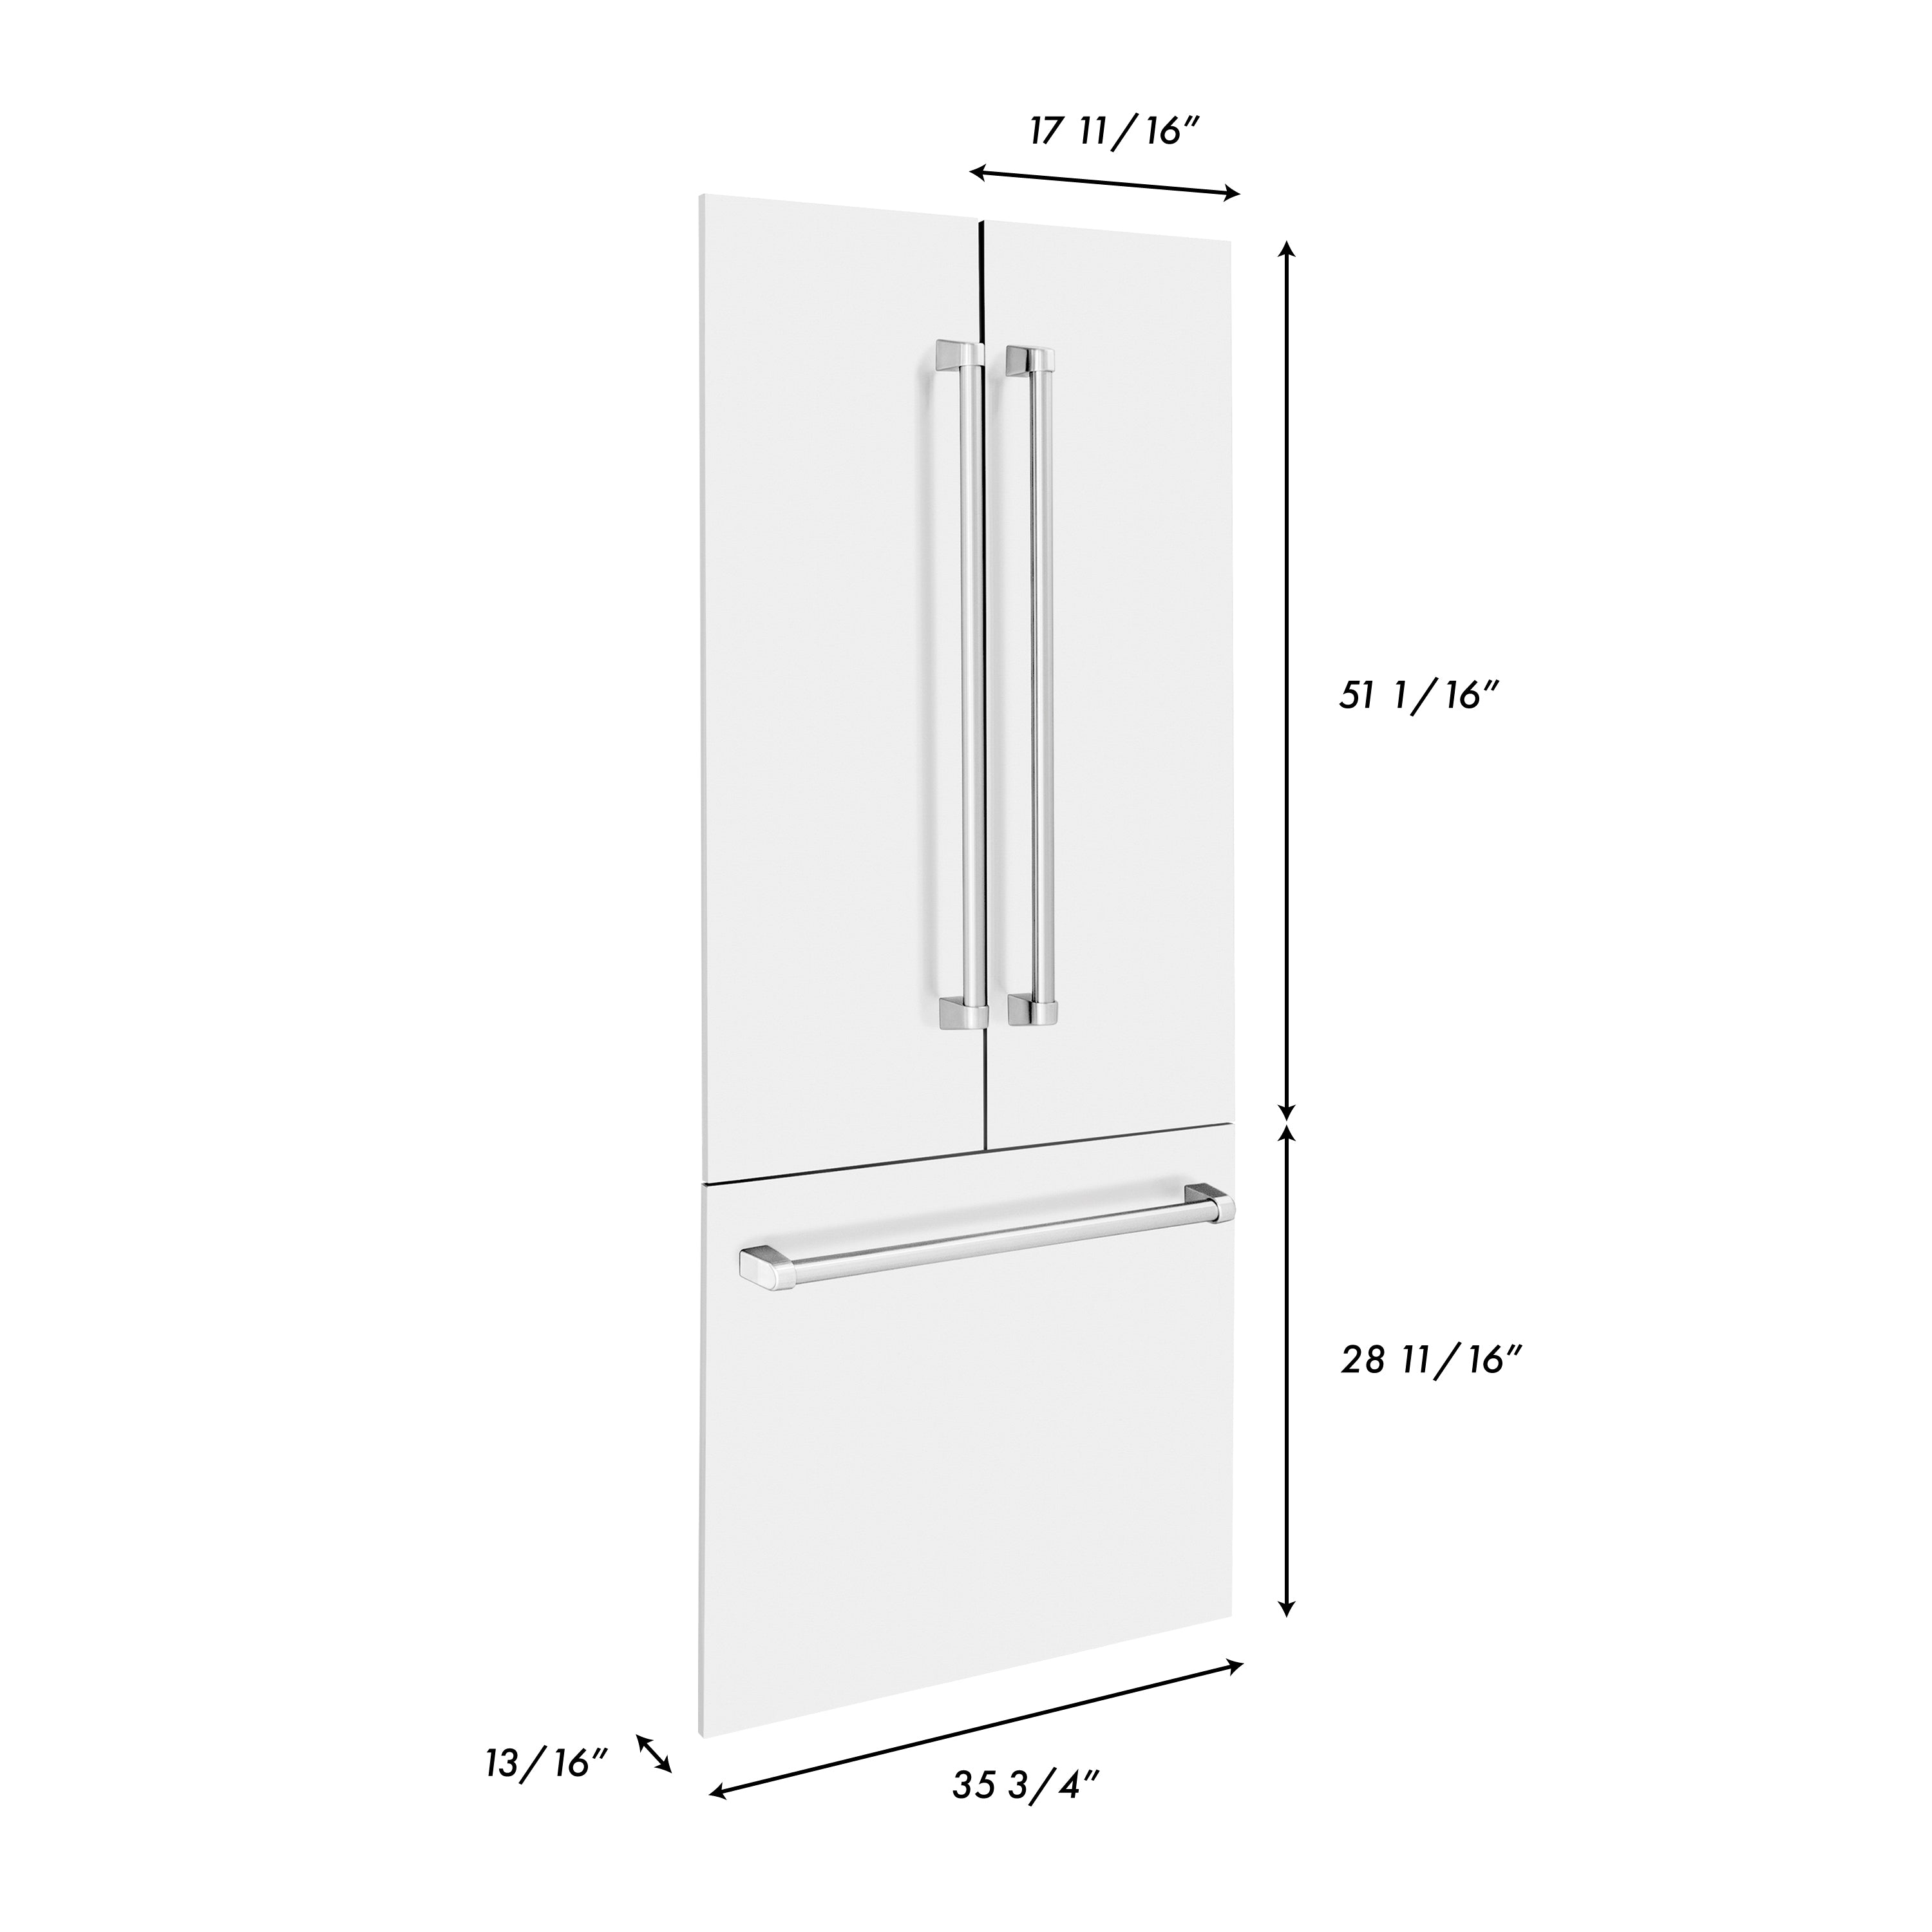 ZLINE 36" Refrigerator Panels in White Matte for a 36" Buit-in Refrigerator (RPBIV-WM-36)